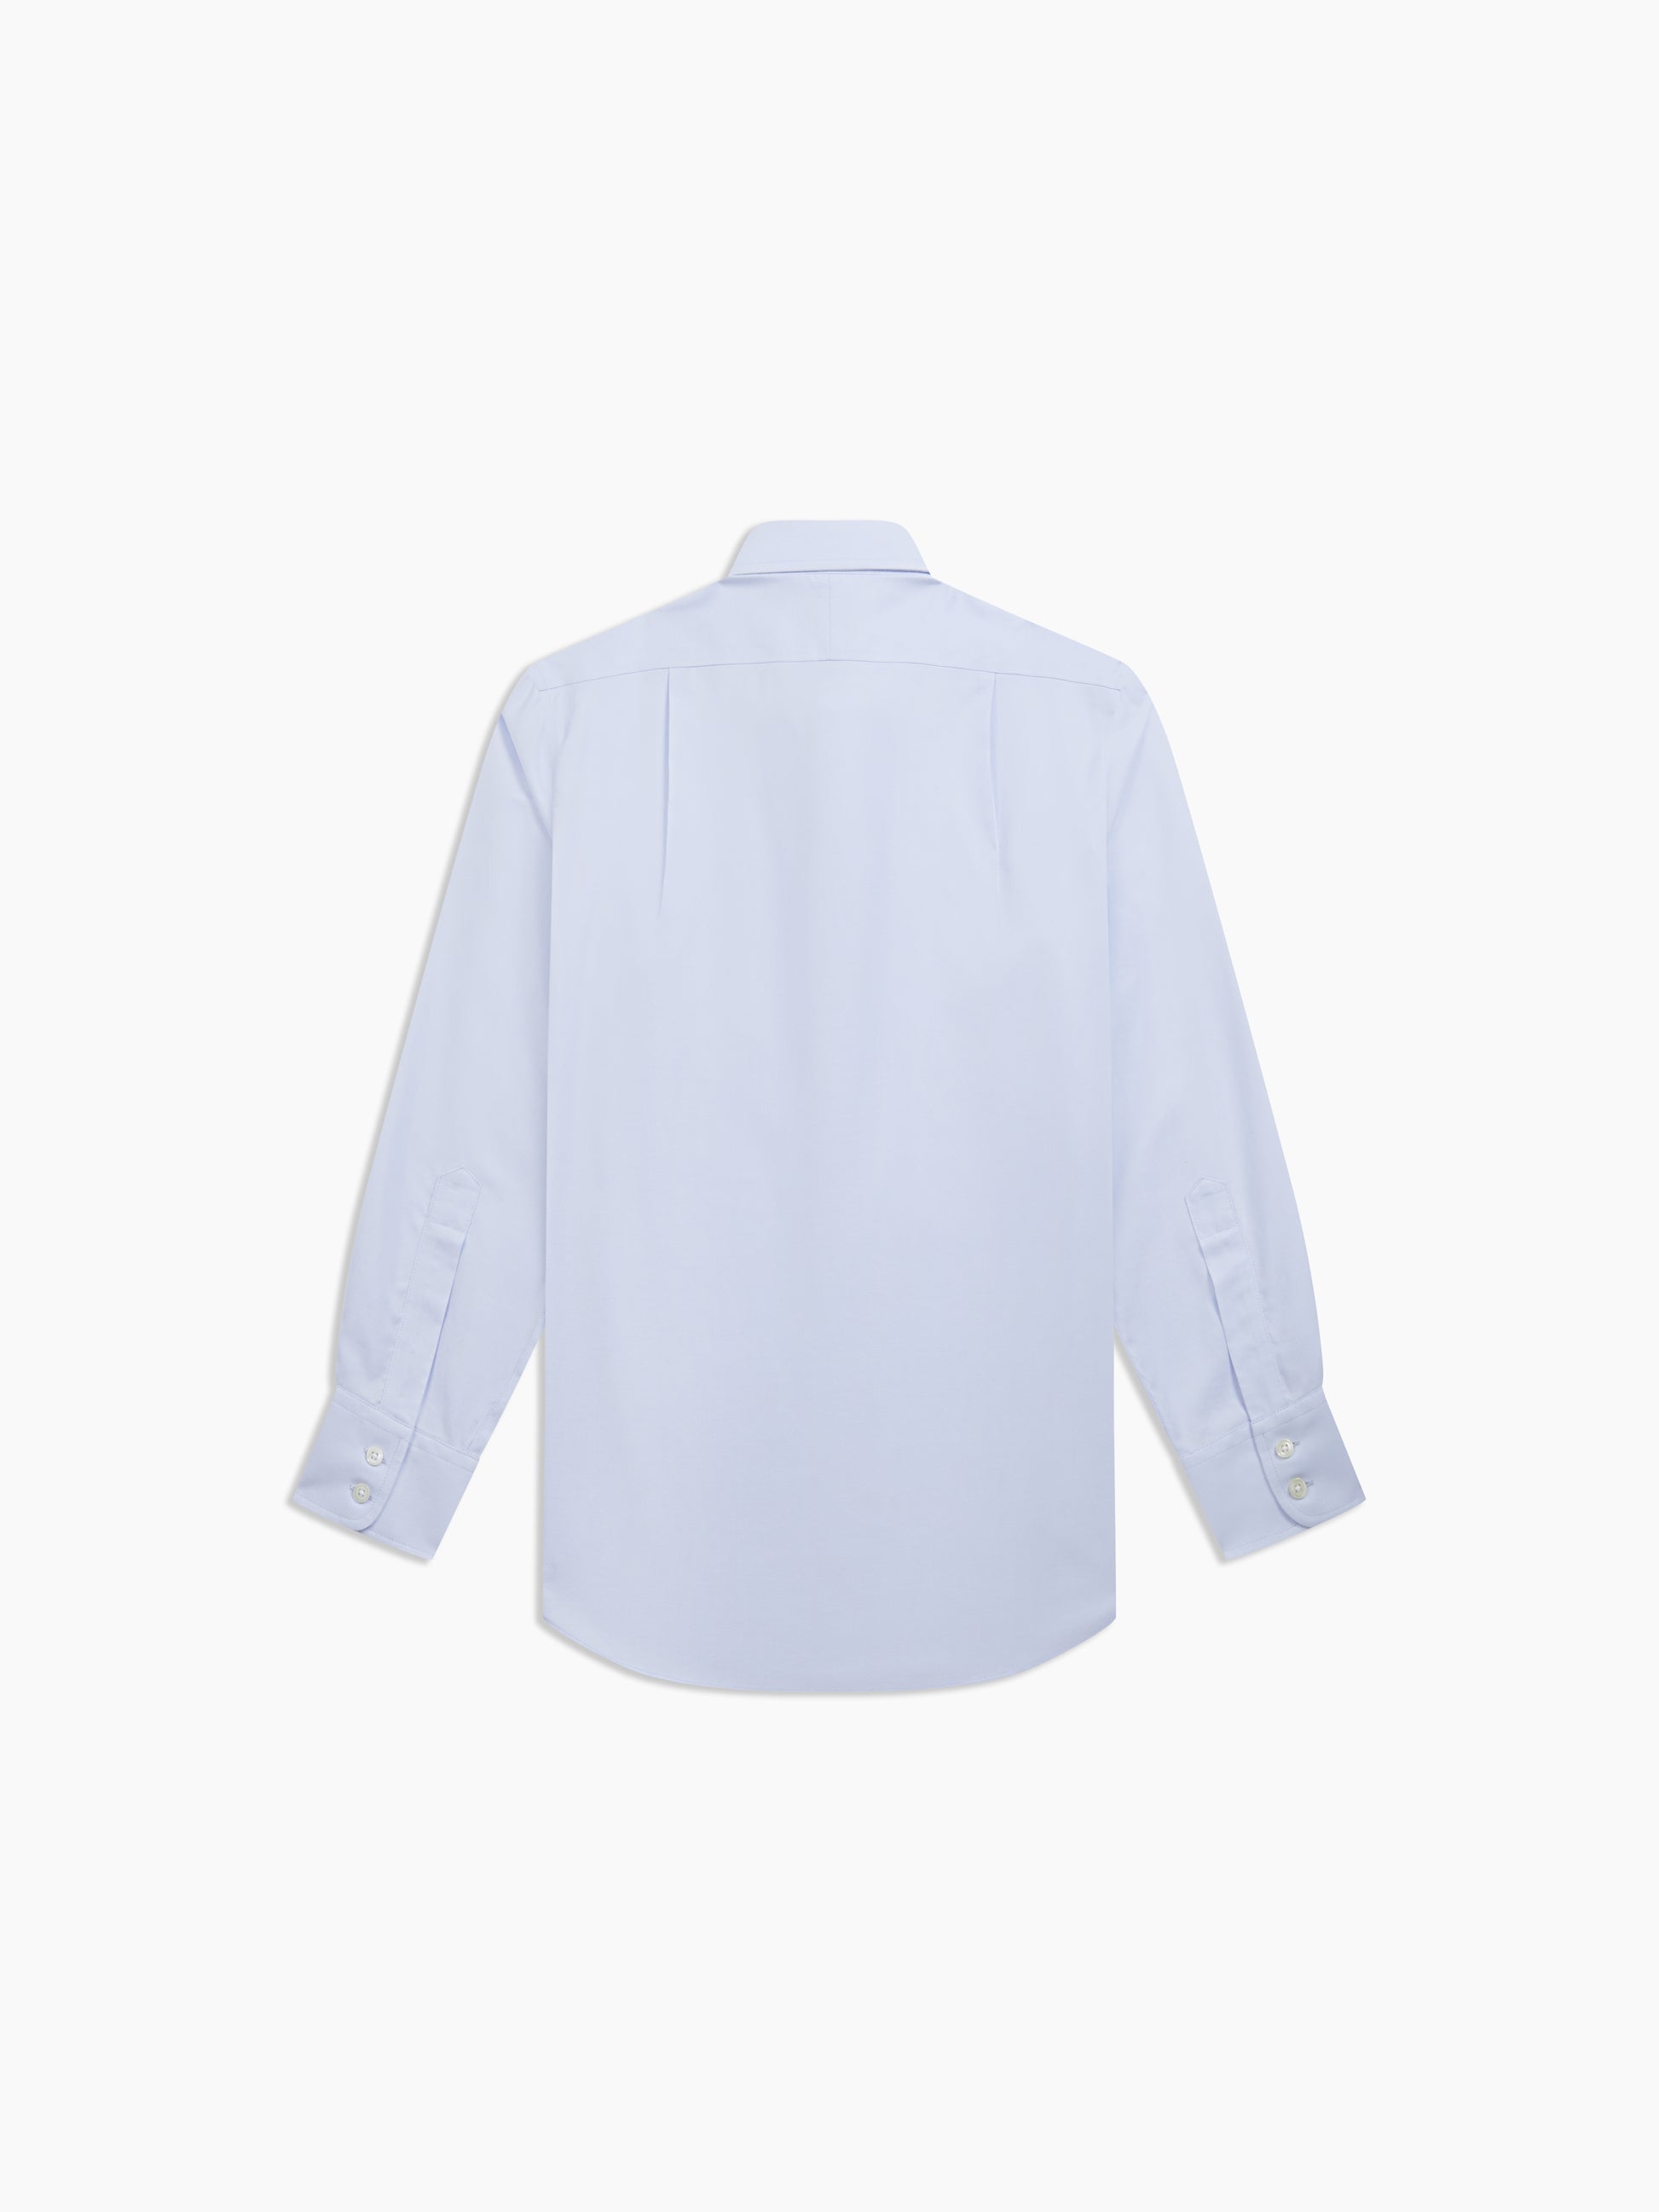 Image 4 of Non-Iron Sky Blue Plain Oxford Regular Fit Single Cuff Classic Collar Shirt